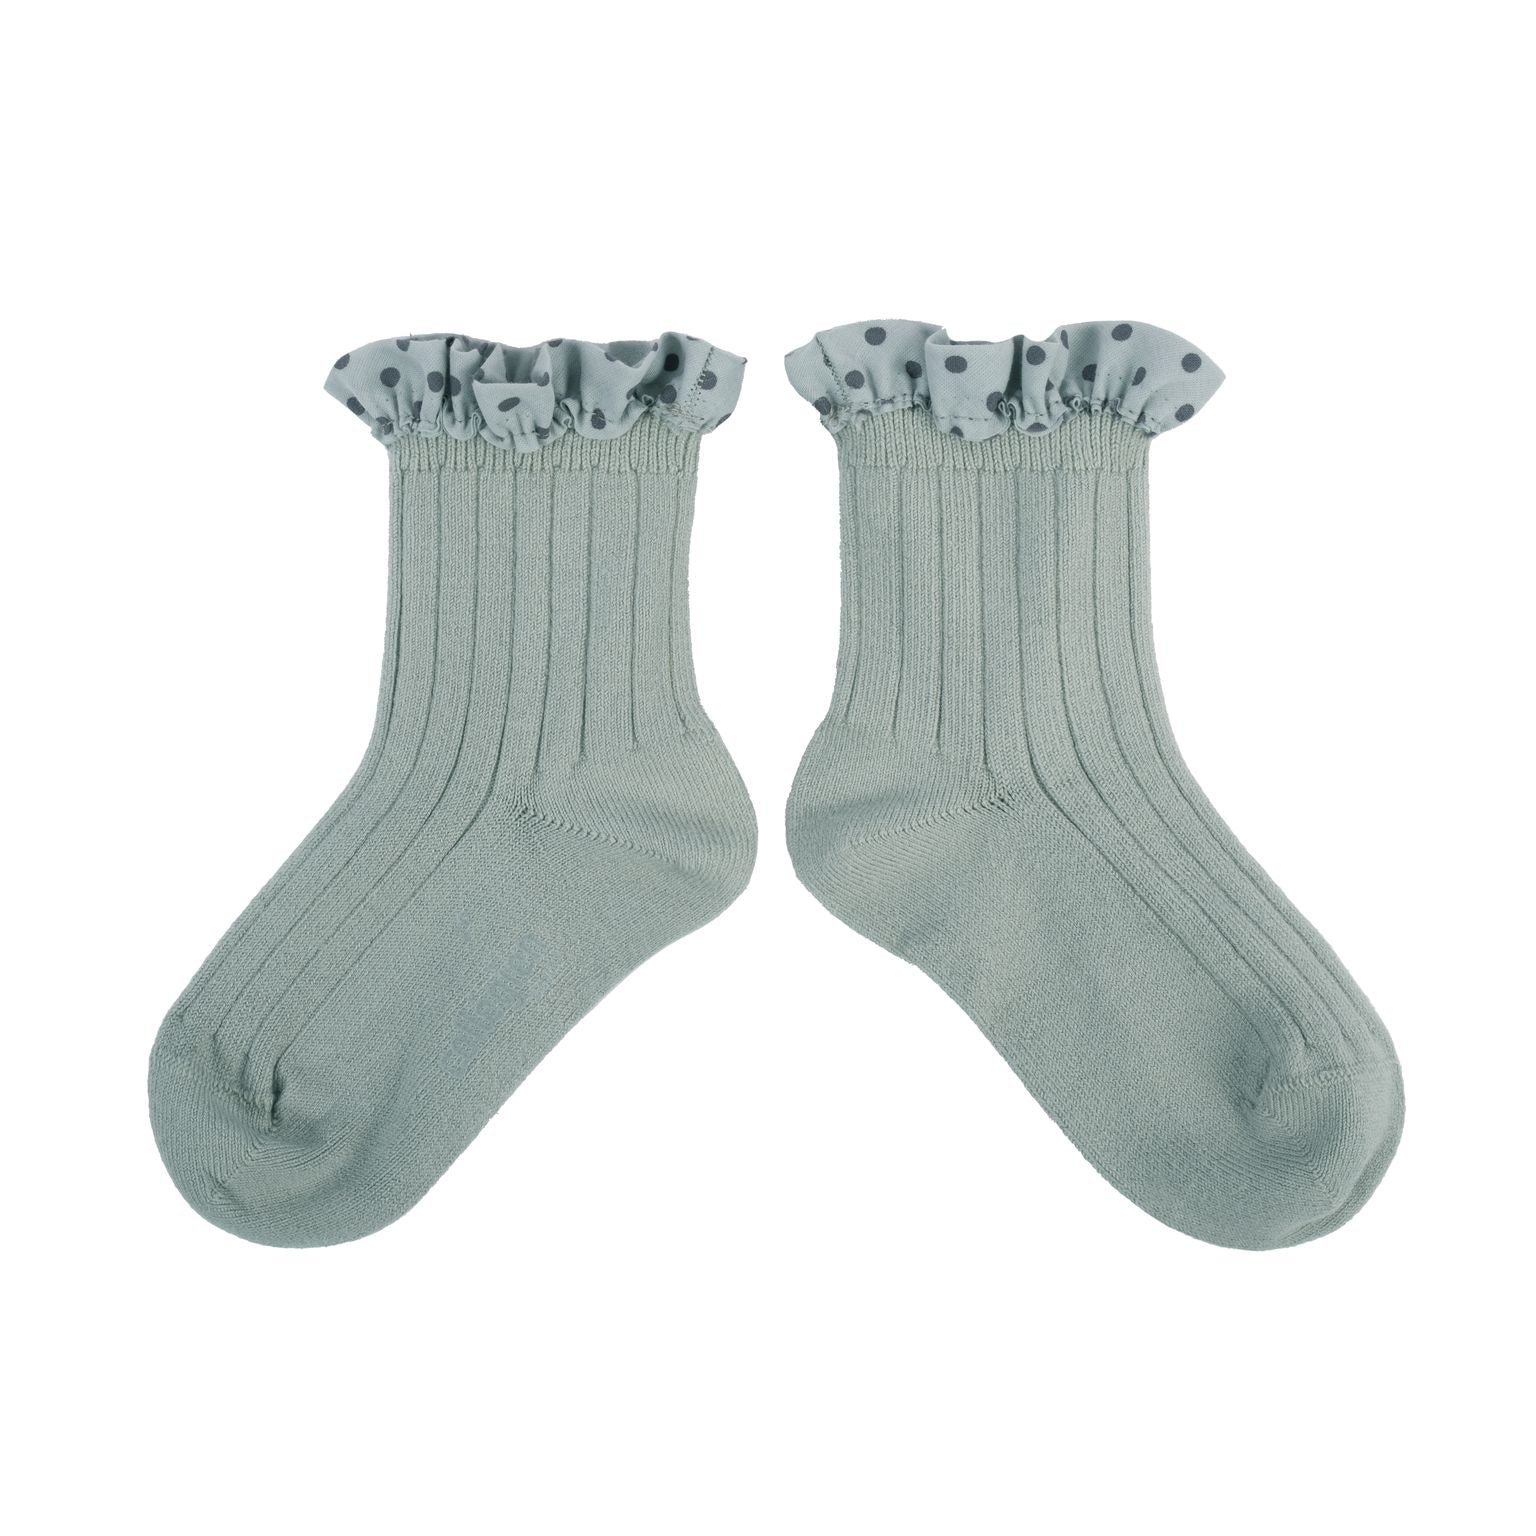 Collegien Polka Dots Ruffle Ankle Socks - Marine